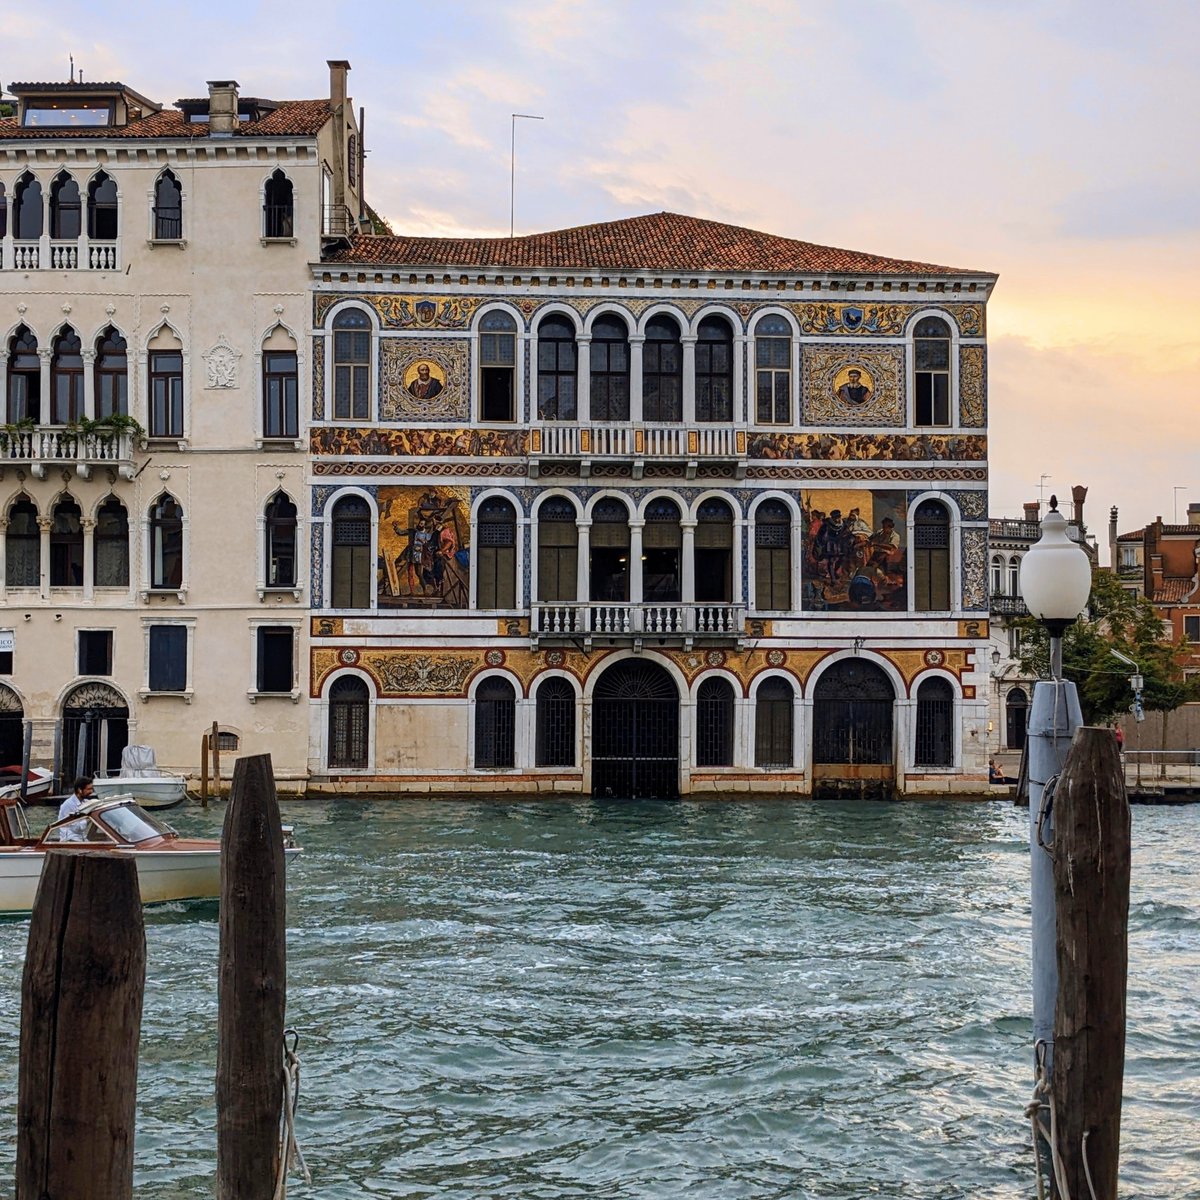 Canal Grande #venezia #venice #veneziagram #veneziaunica #igersvenezia #veneziadavivere #travelphotography #venise #picoftheday #architecture